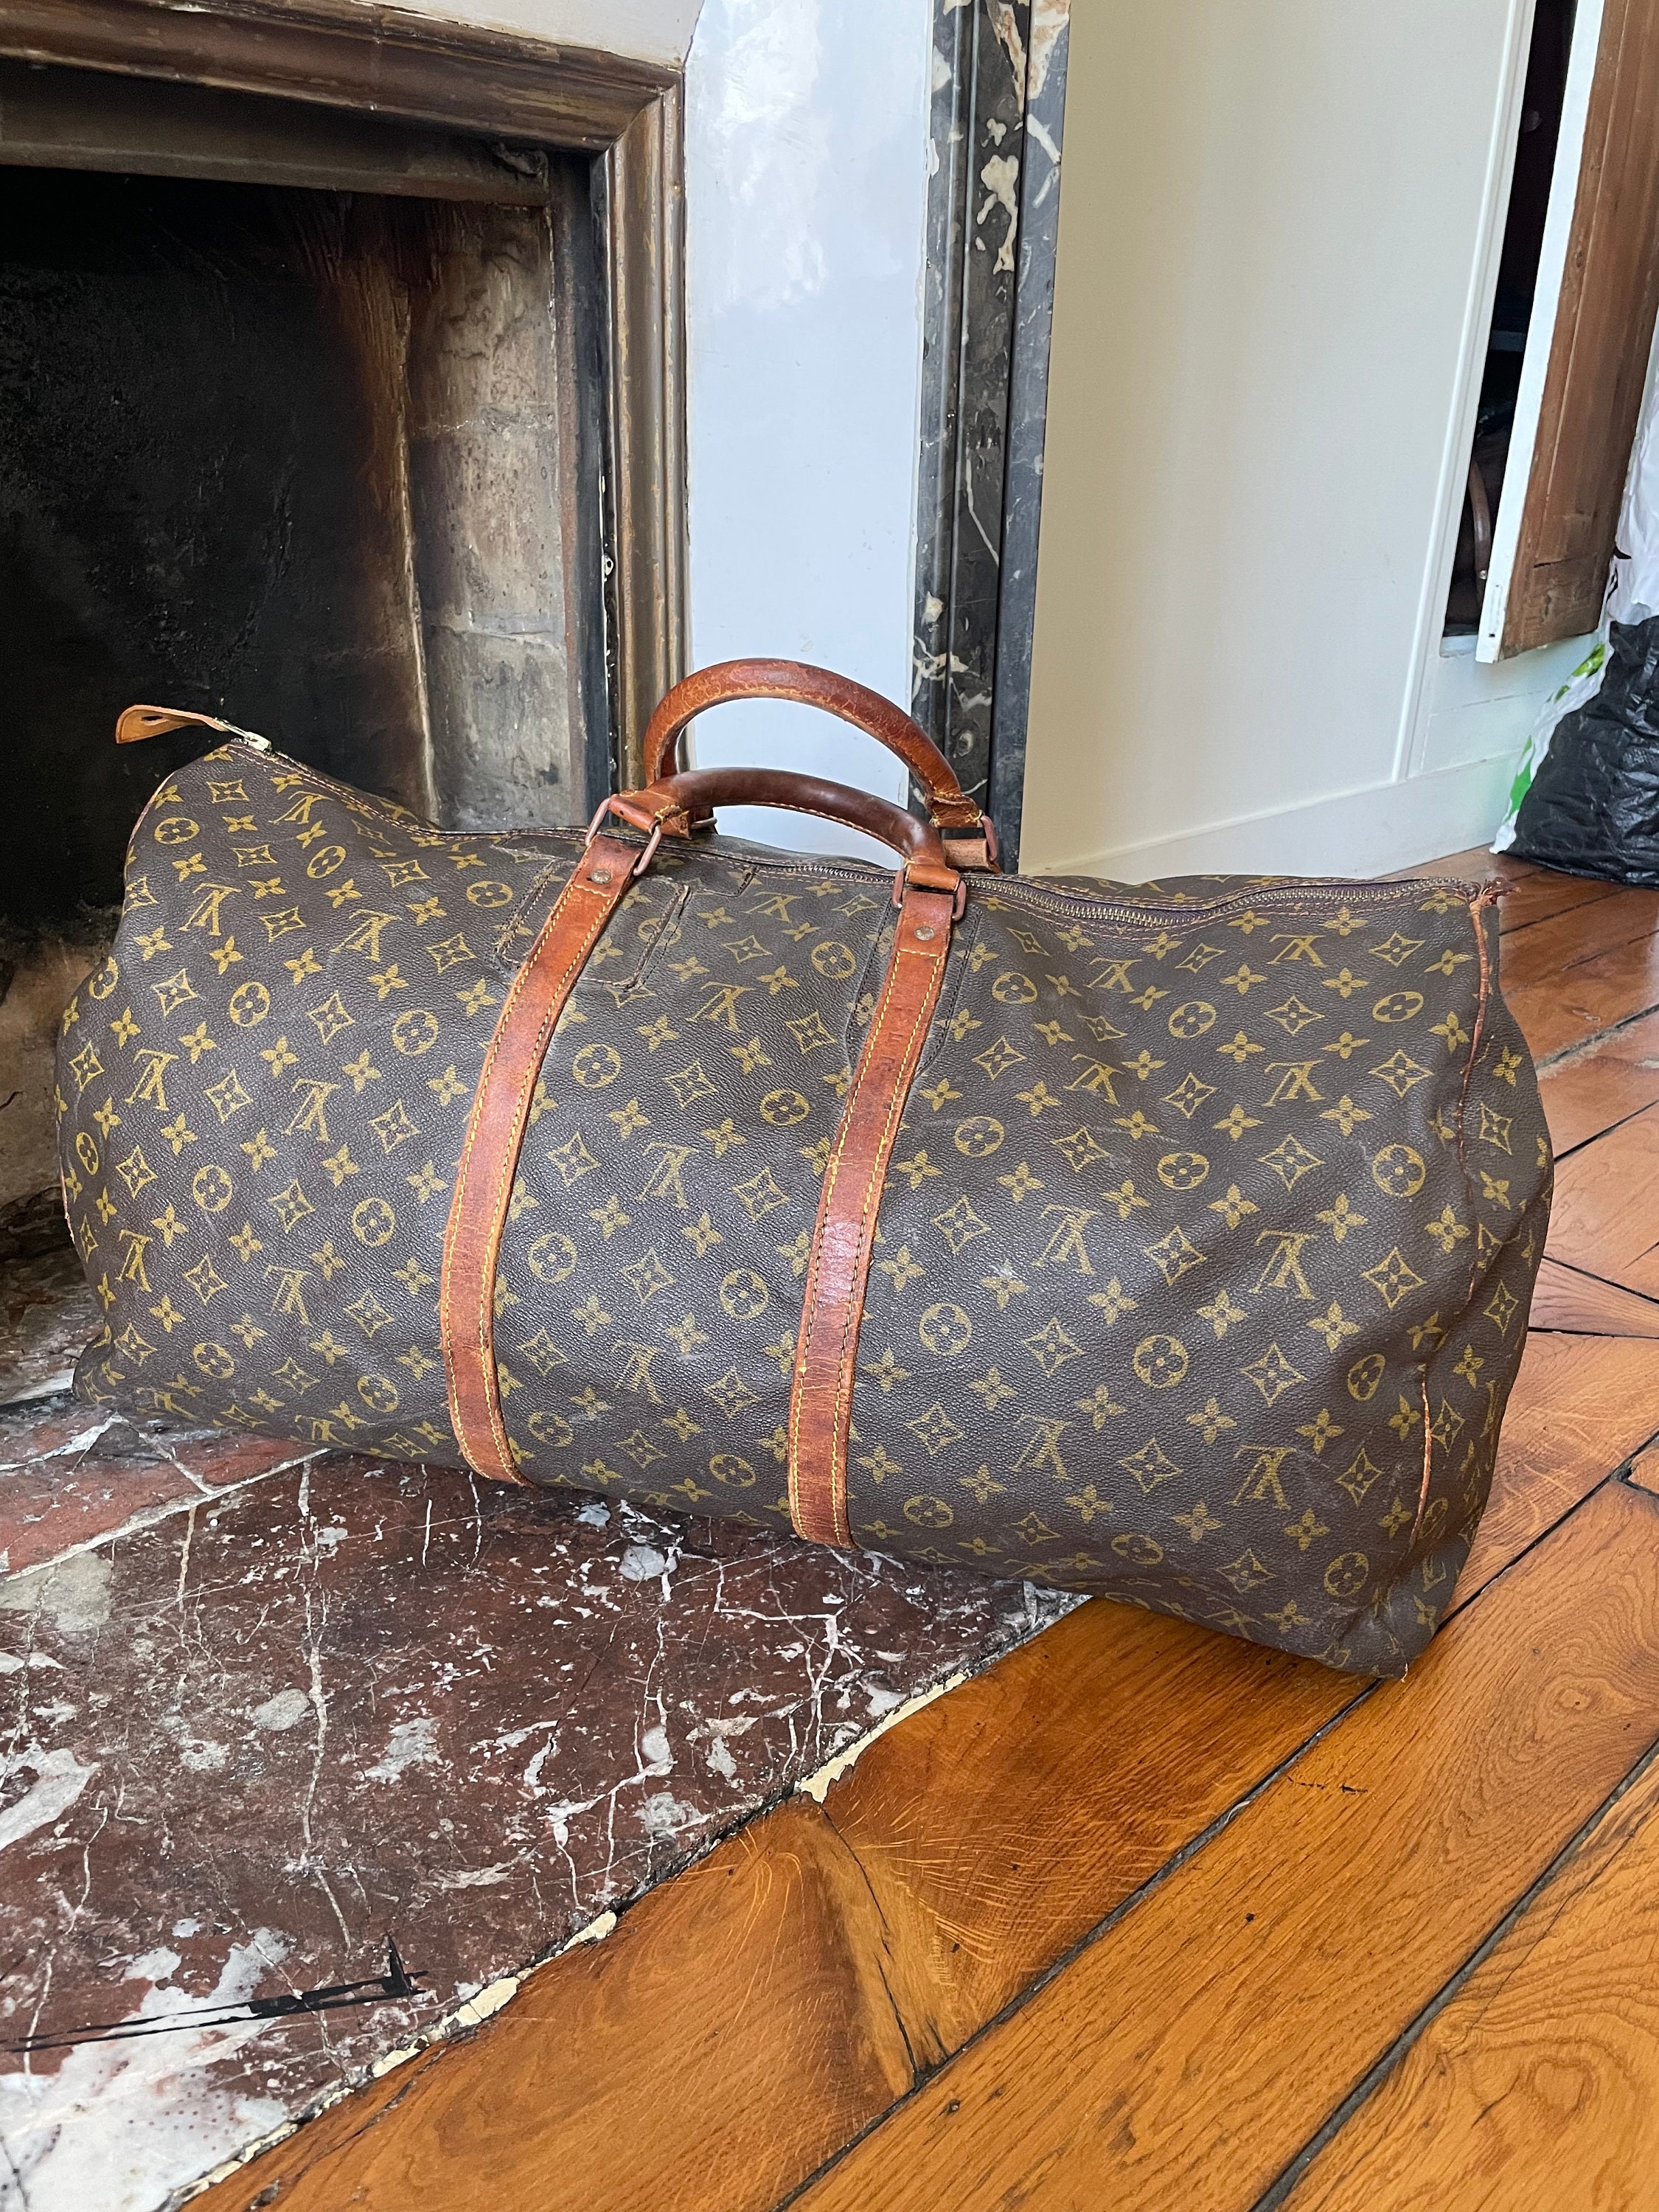 Louis Vuitton Bag Men 